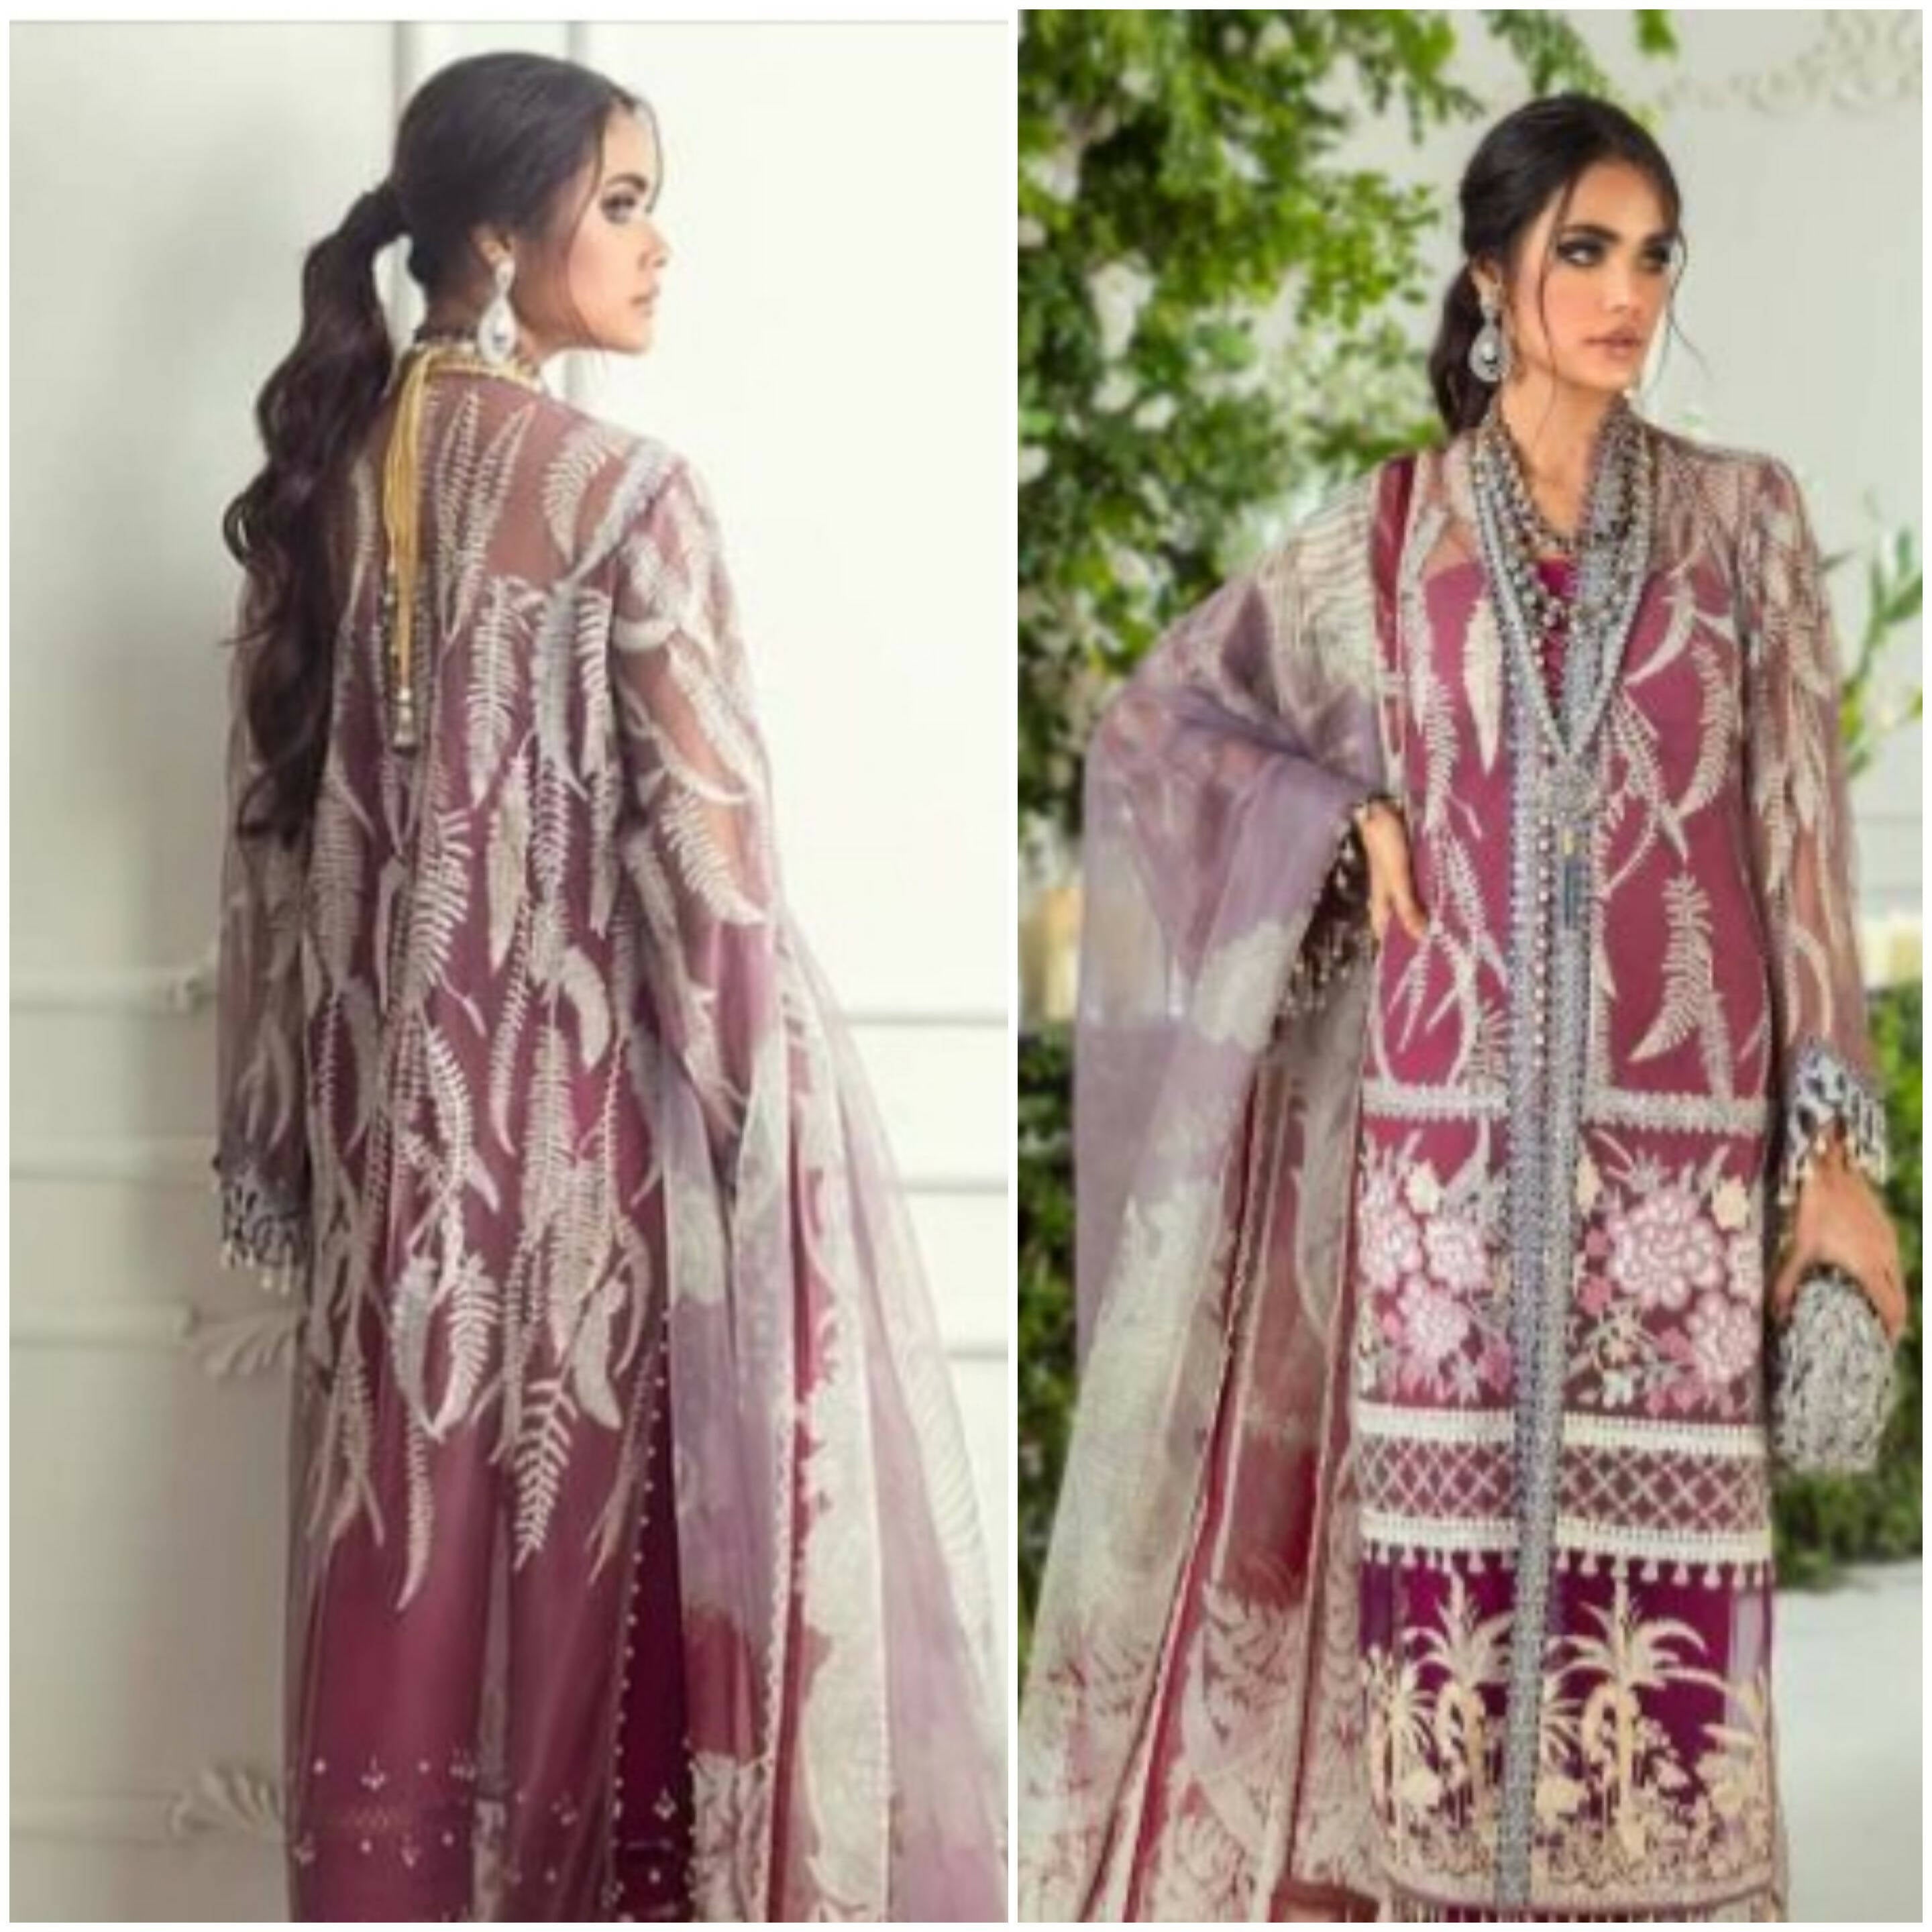 Sana Safinaz | Purple Luxury Festive 3 Pc Suit | Women Formals | Worn Once